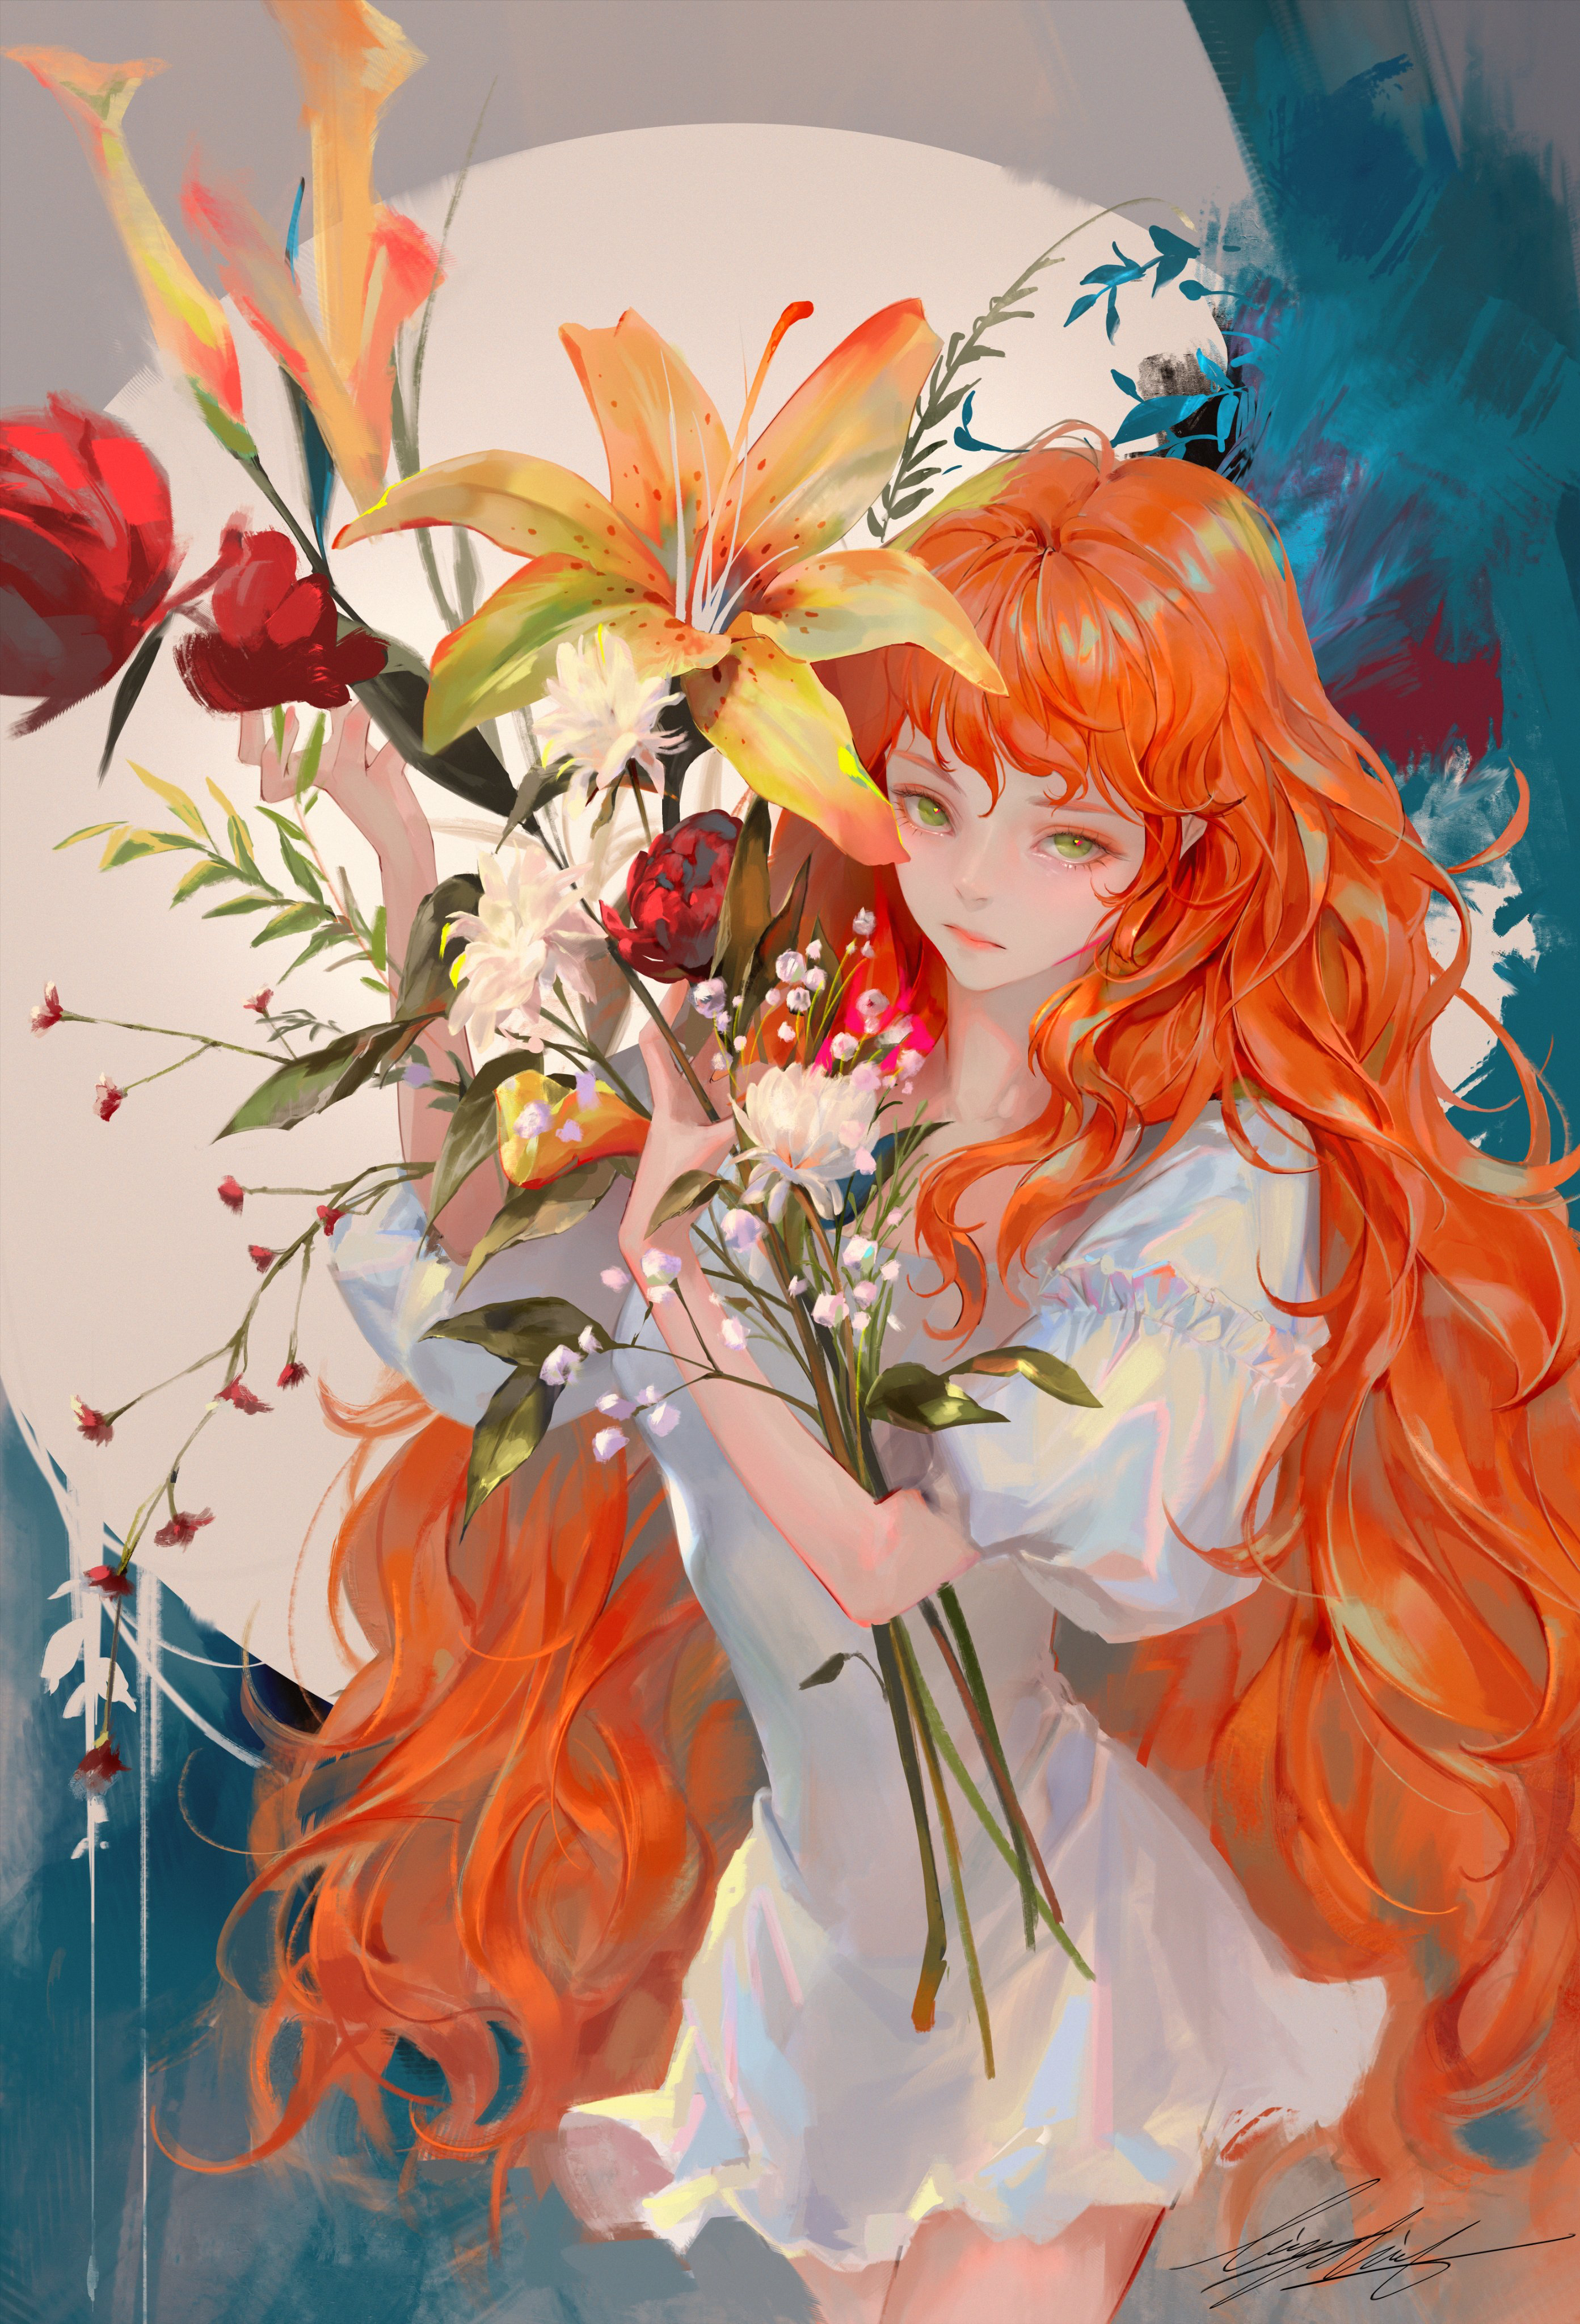 Redhead Green Eyes Bouquets Anime Girls Artwork JiNYOUNG SON 2785x4096